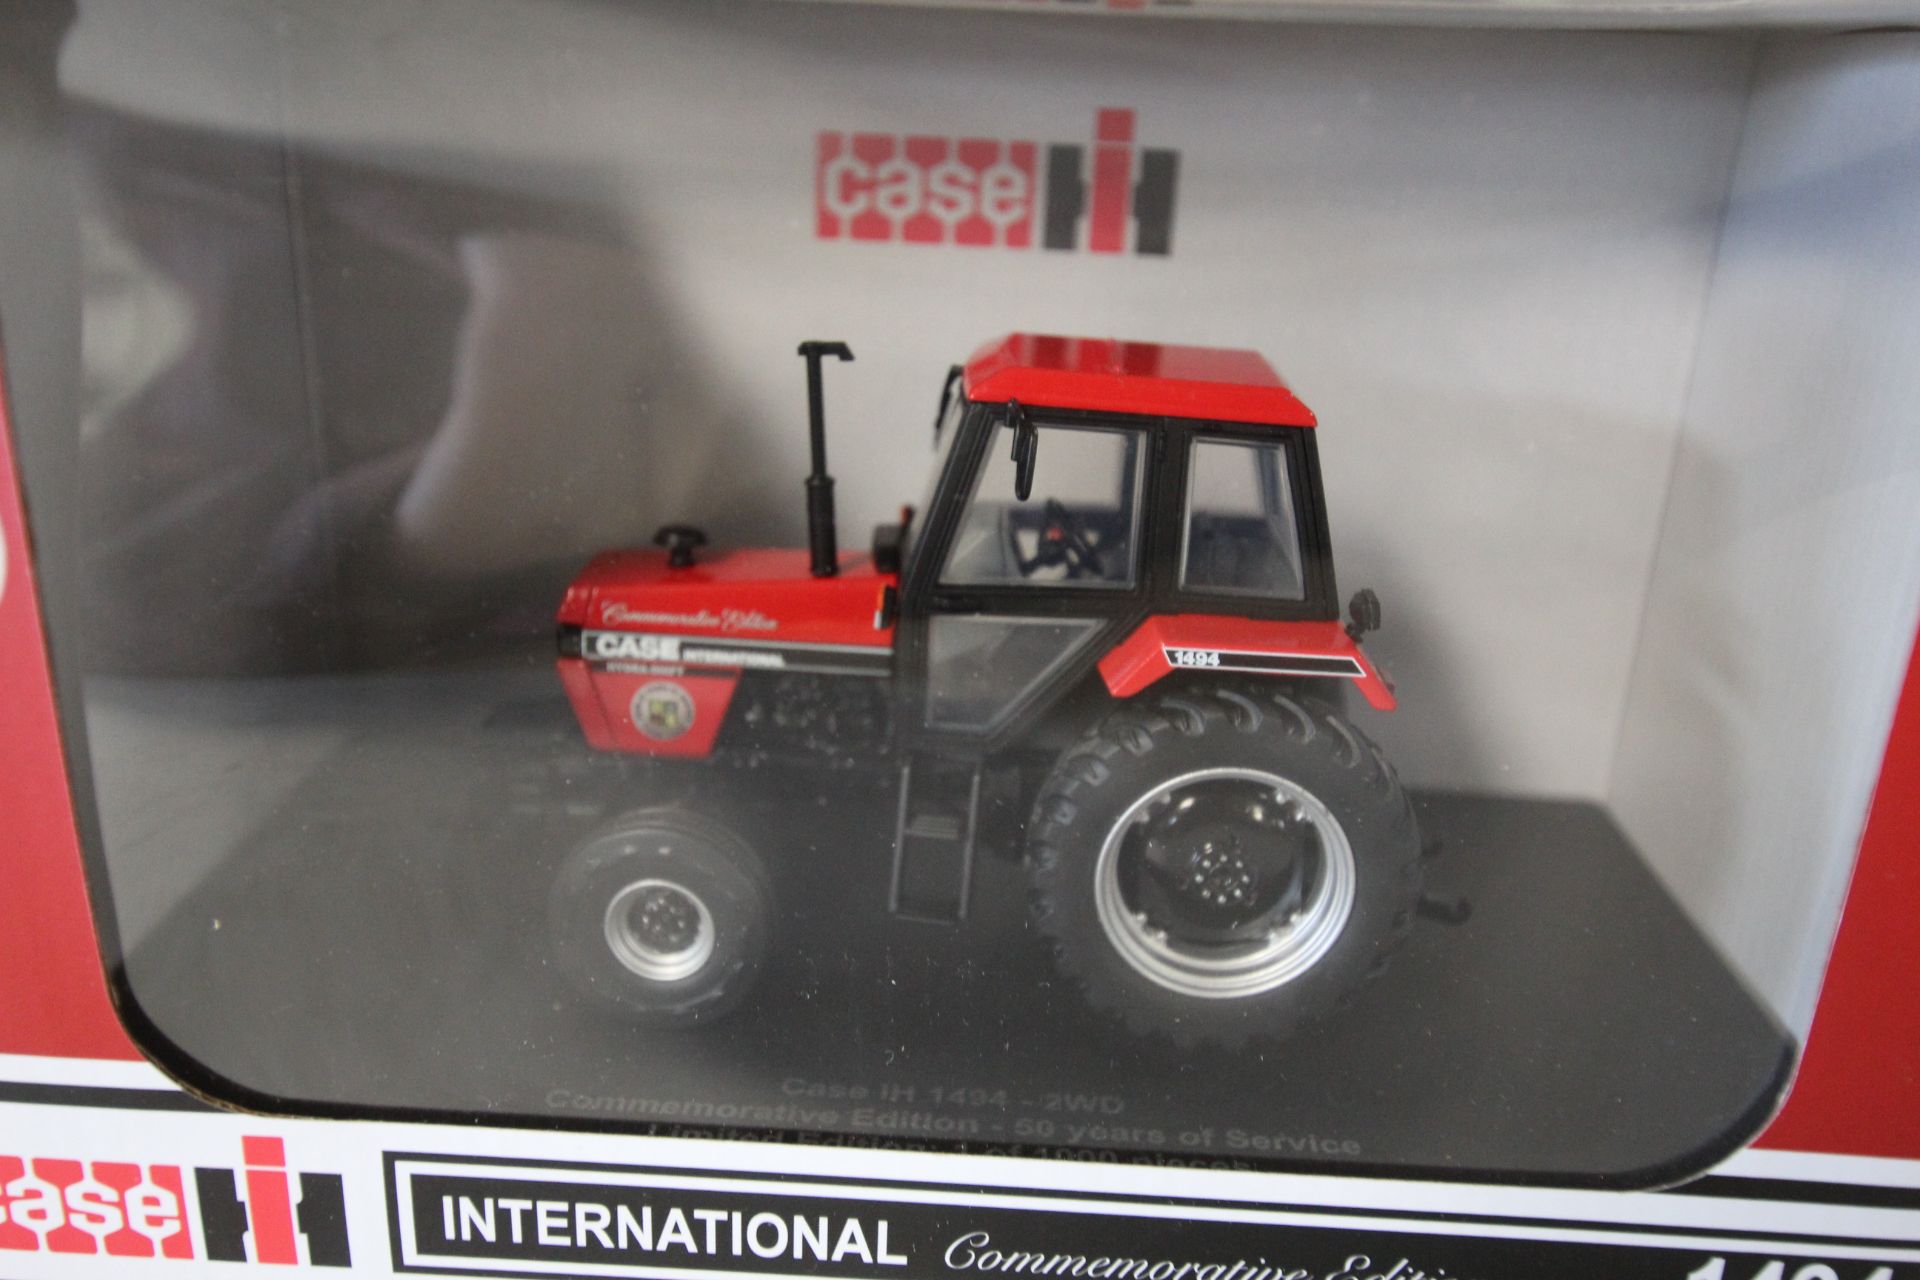 UH Case/IH 1494 2wd Tractor - Commemorative Limited Edition Scale. V - Bild 2 aus 2